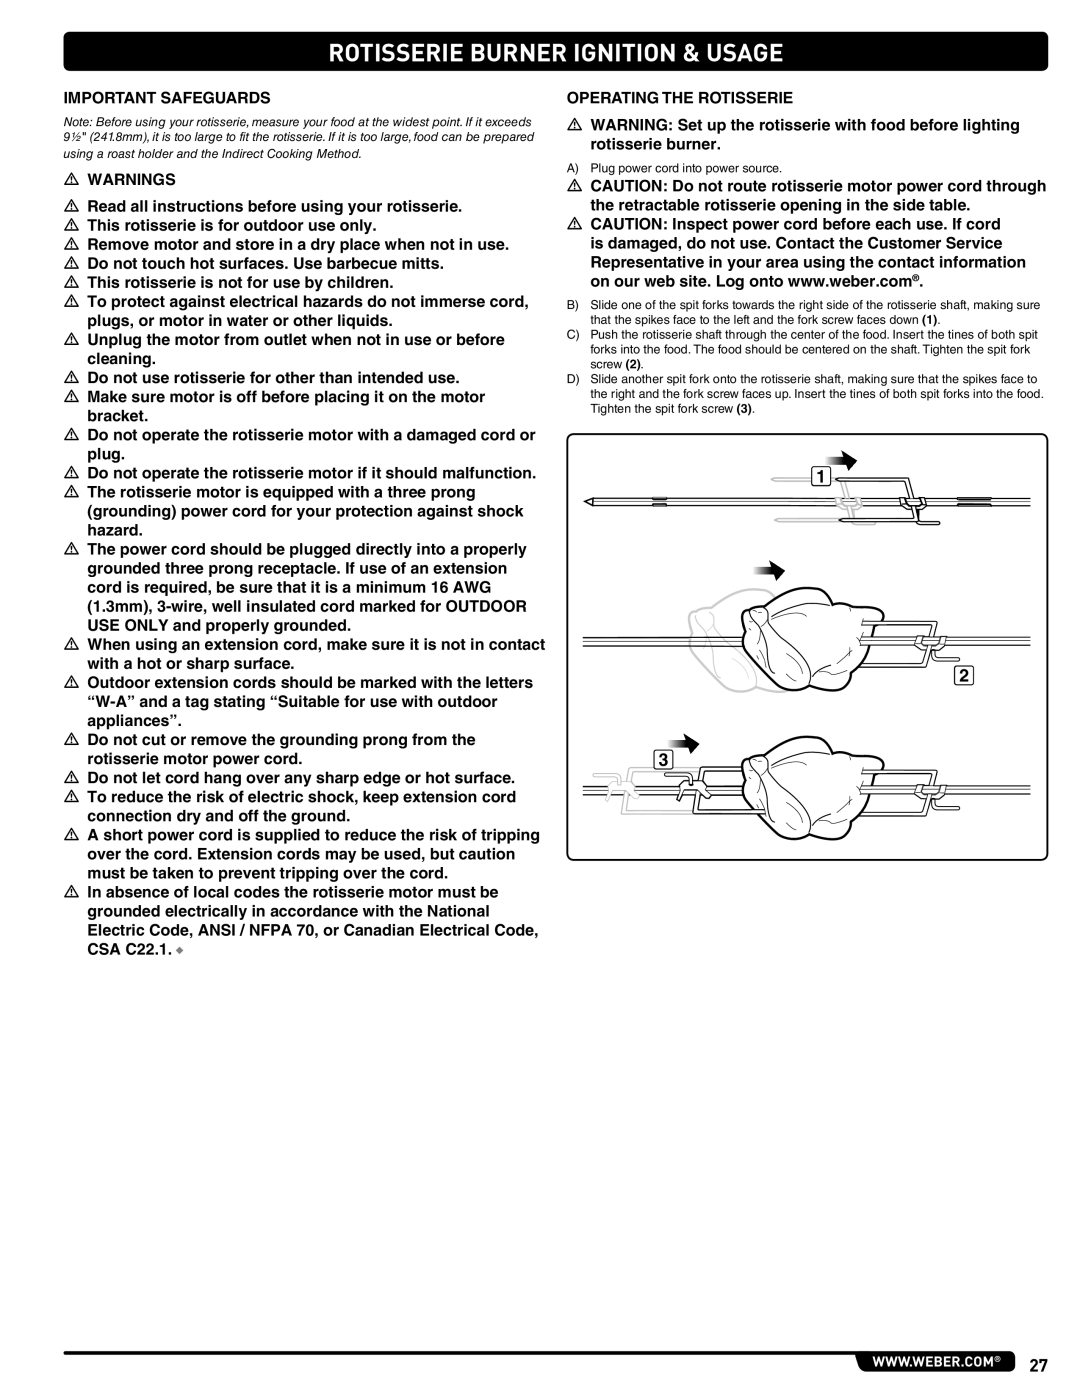 Weber 660- LP, Weber manual Important Safeguards, Operating the Rotisserie 